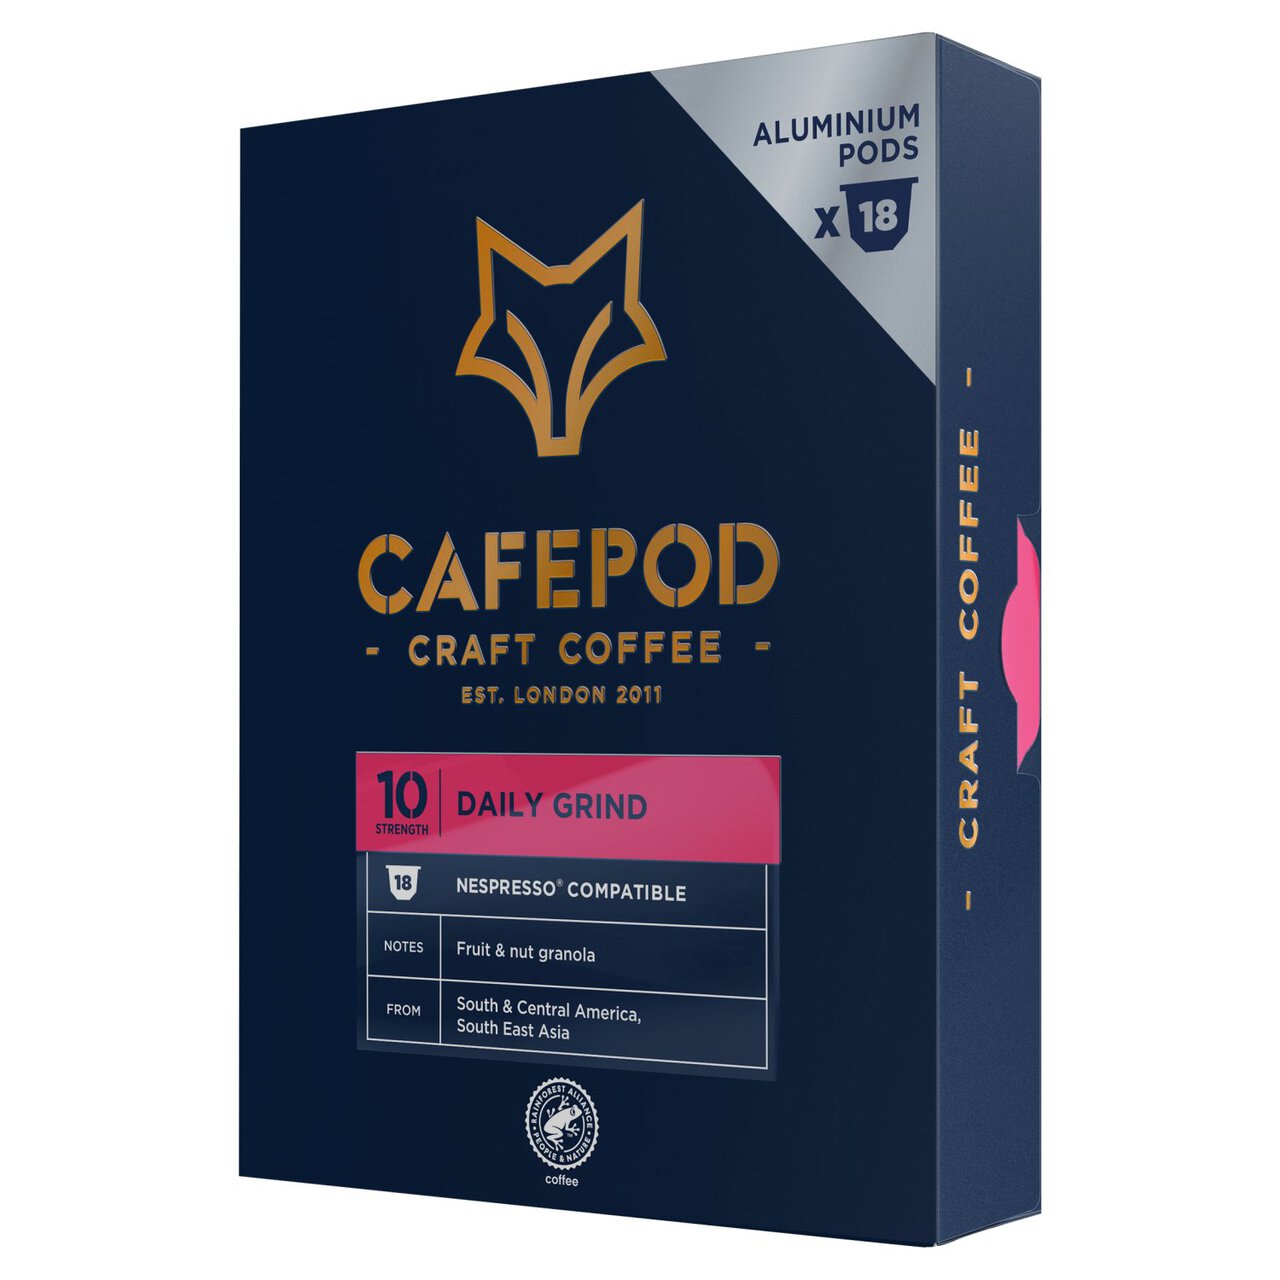 CafePod SW18 Daily Grind Nespresso Compatible Aluminium Coffee Pods 18 per pack